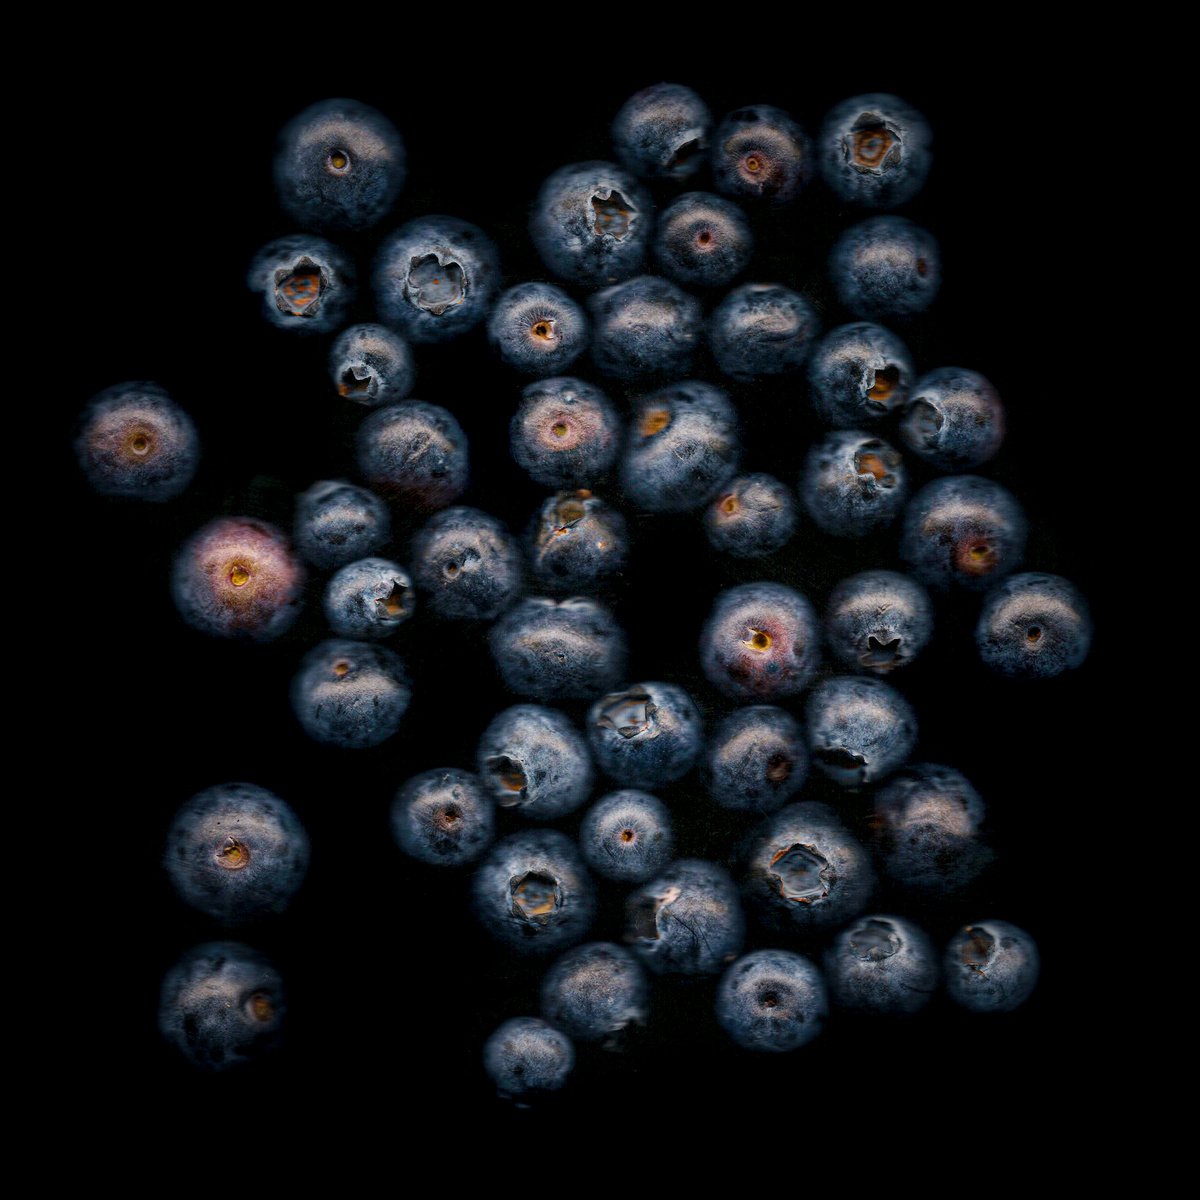 Blueberries by Paul Nash